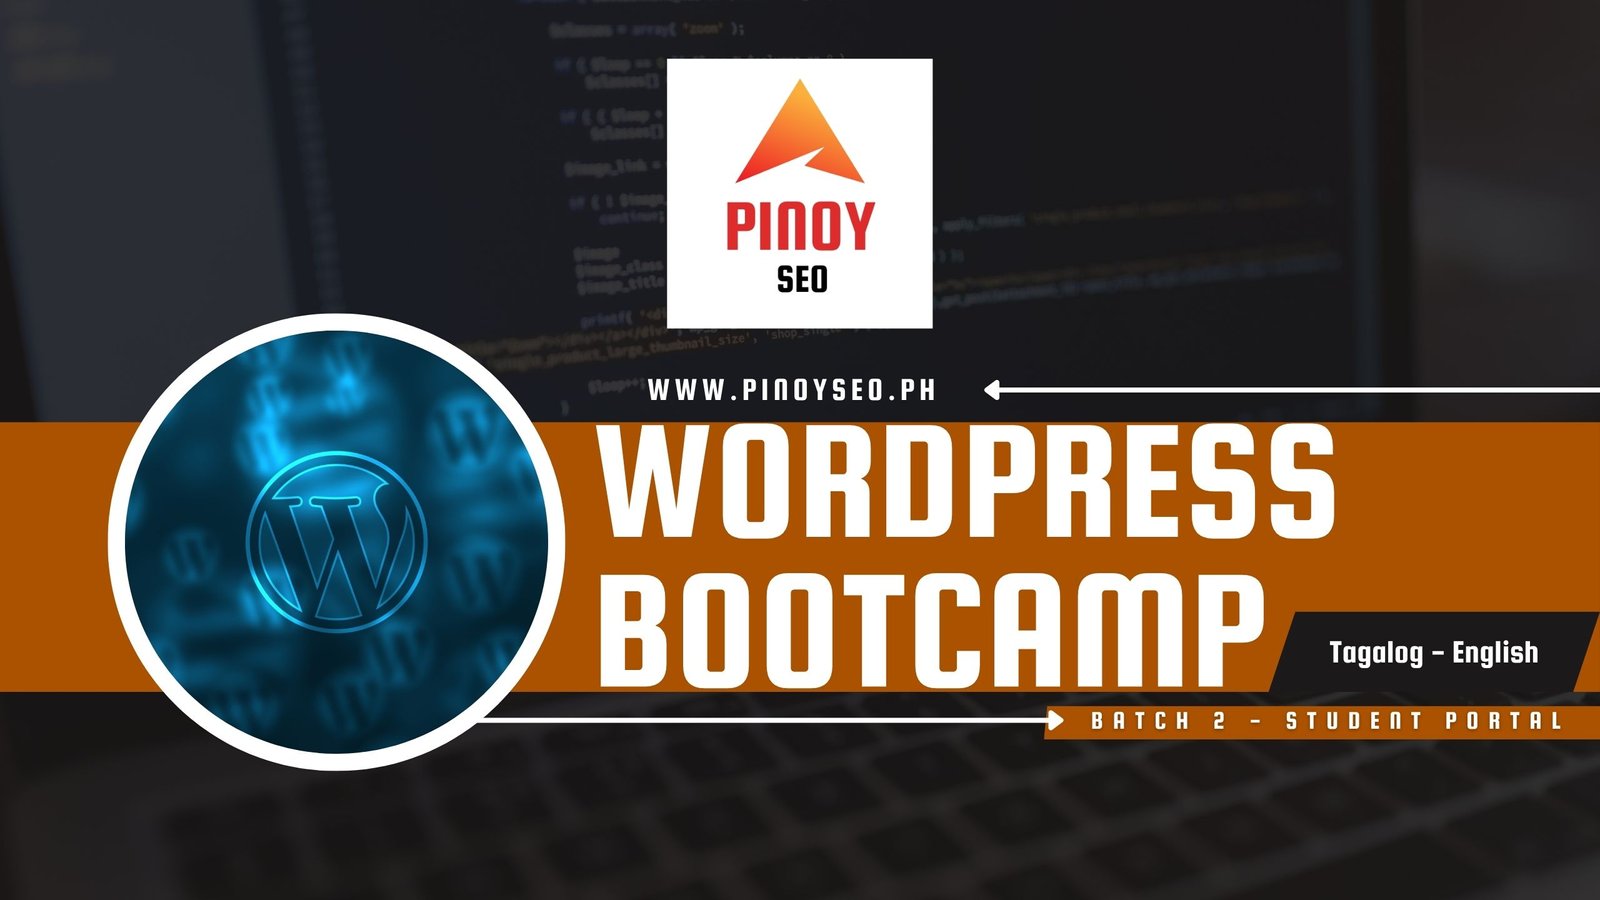 WordPress Bootcamp – Batch 2 Student Portal